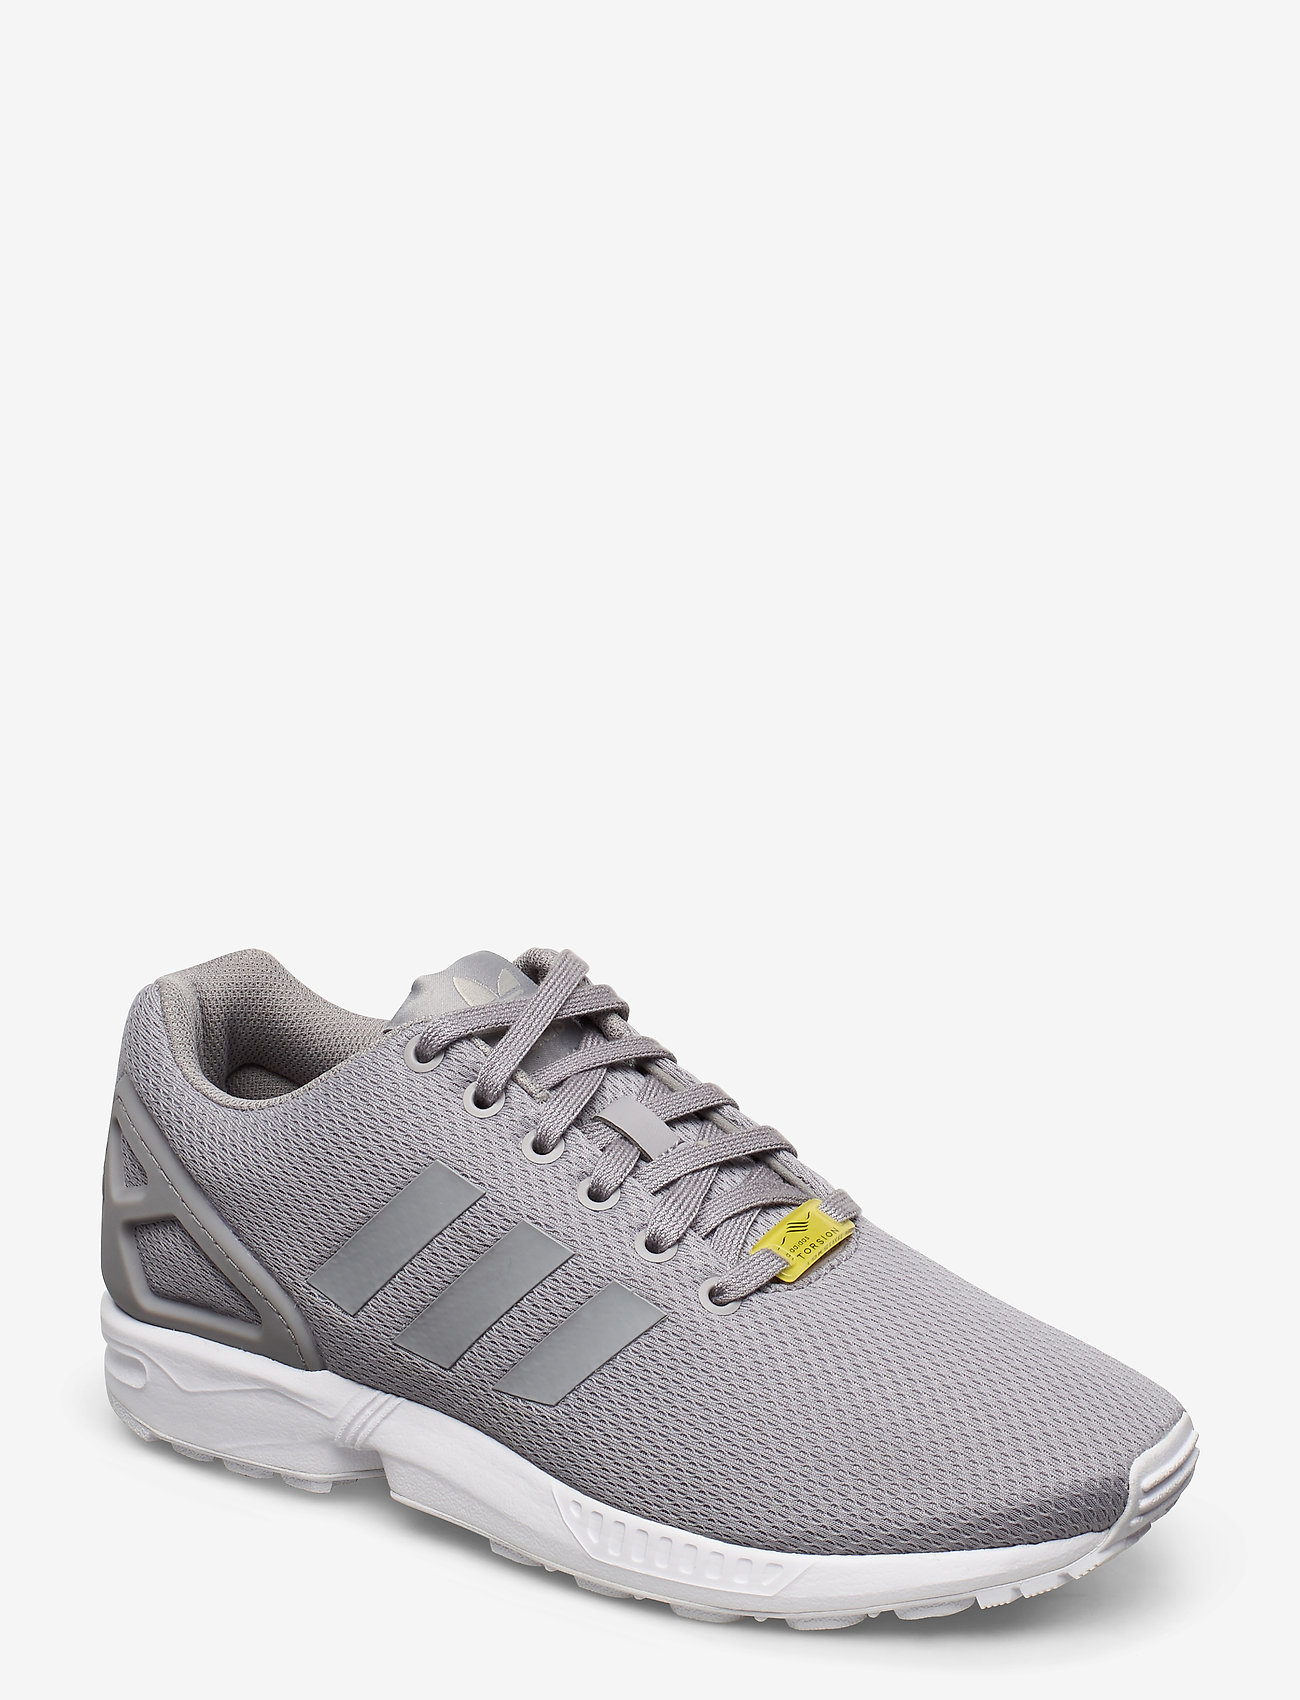 Zx Flux (Lgrani/lgrani/cwhite) (66.47 €) - adidas Originals - | Boozt.com